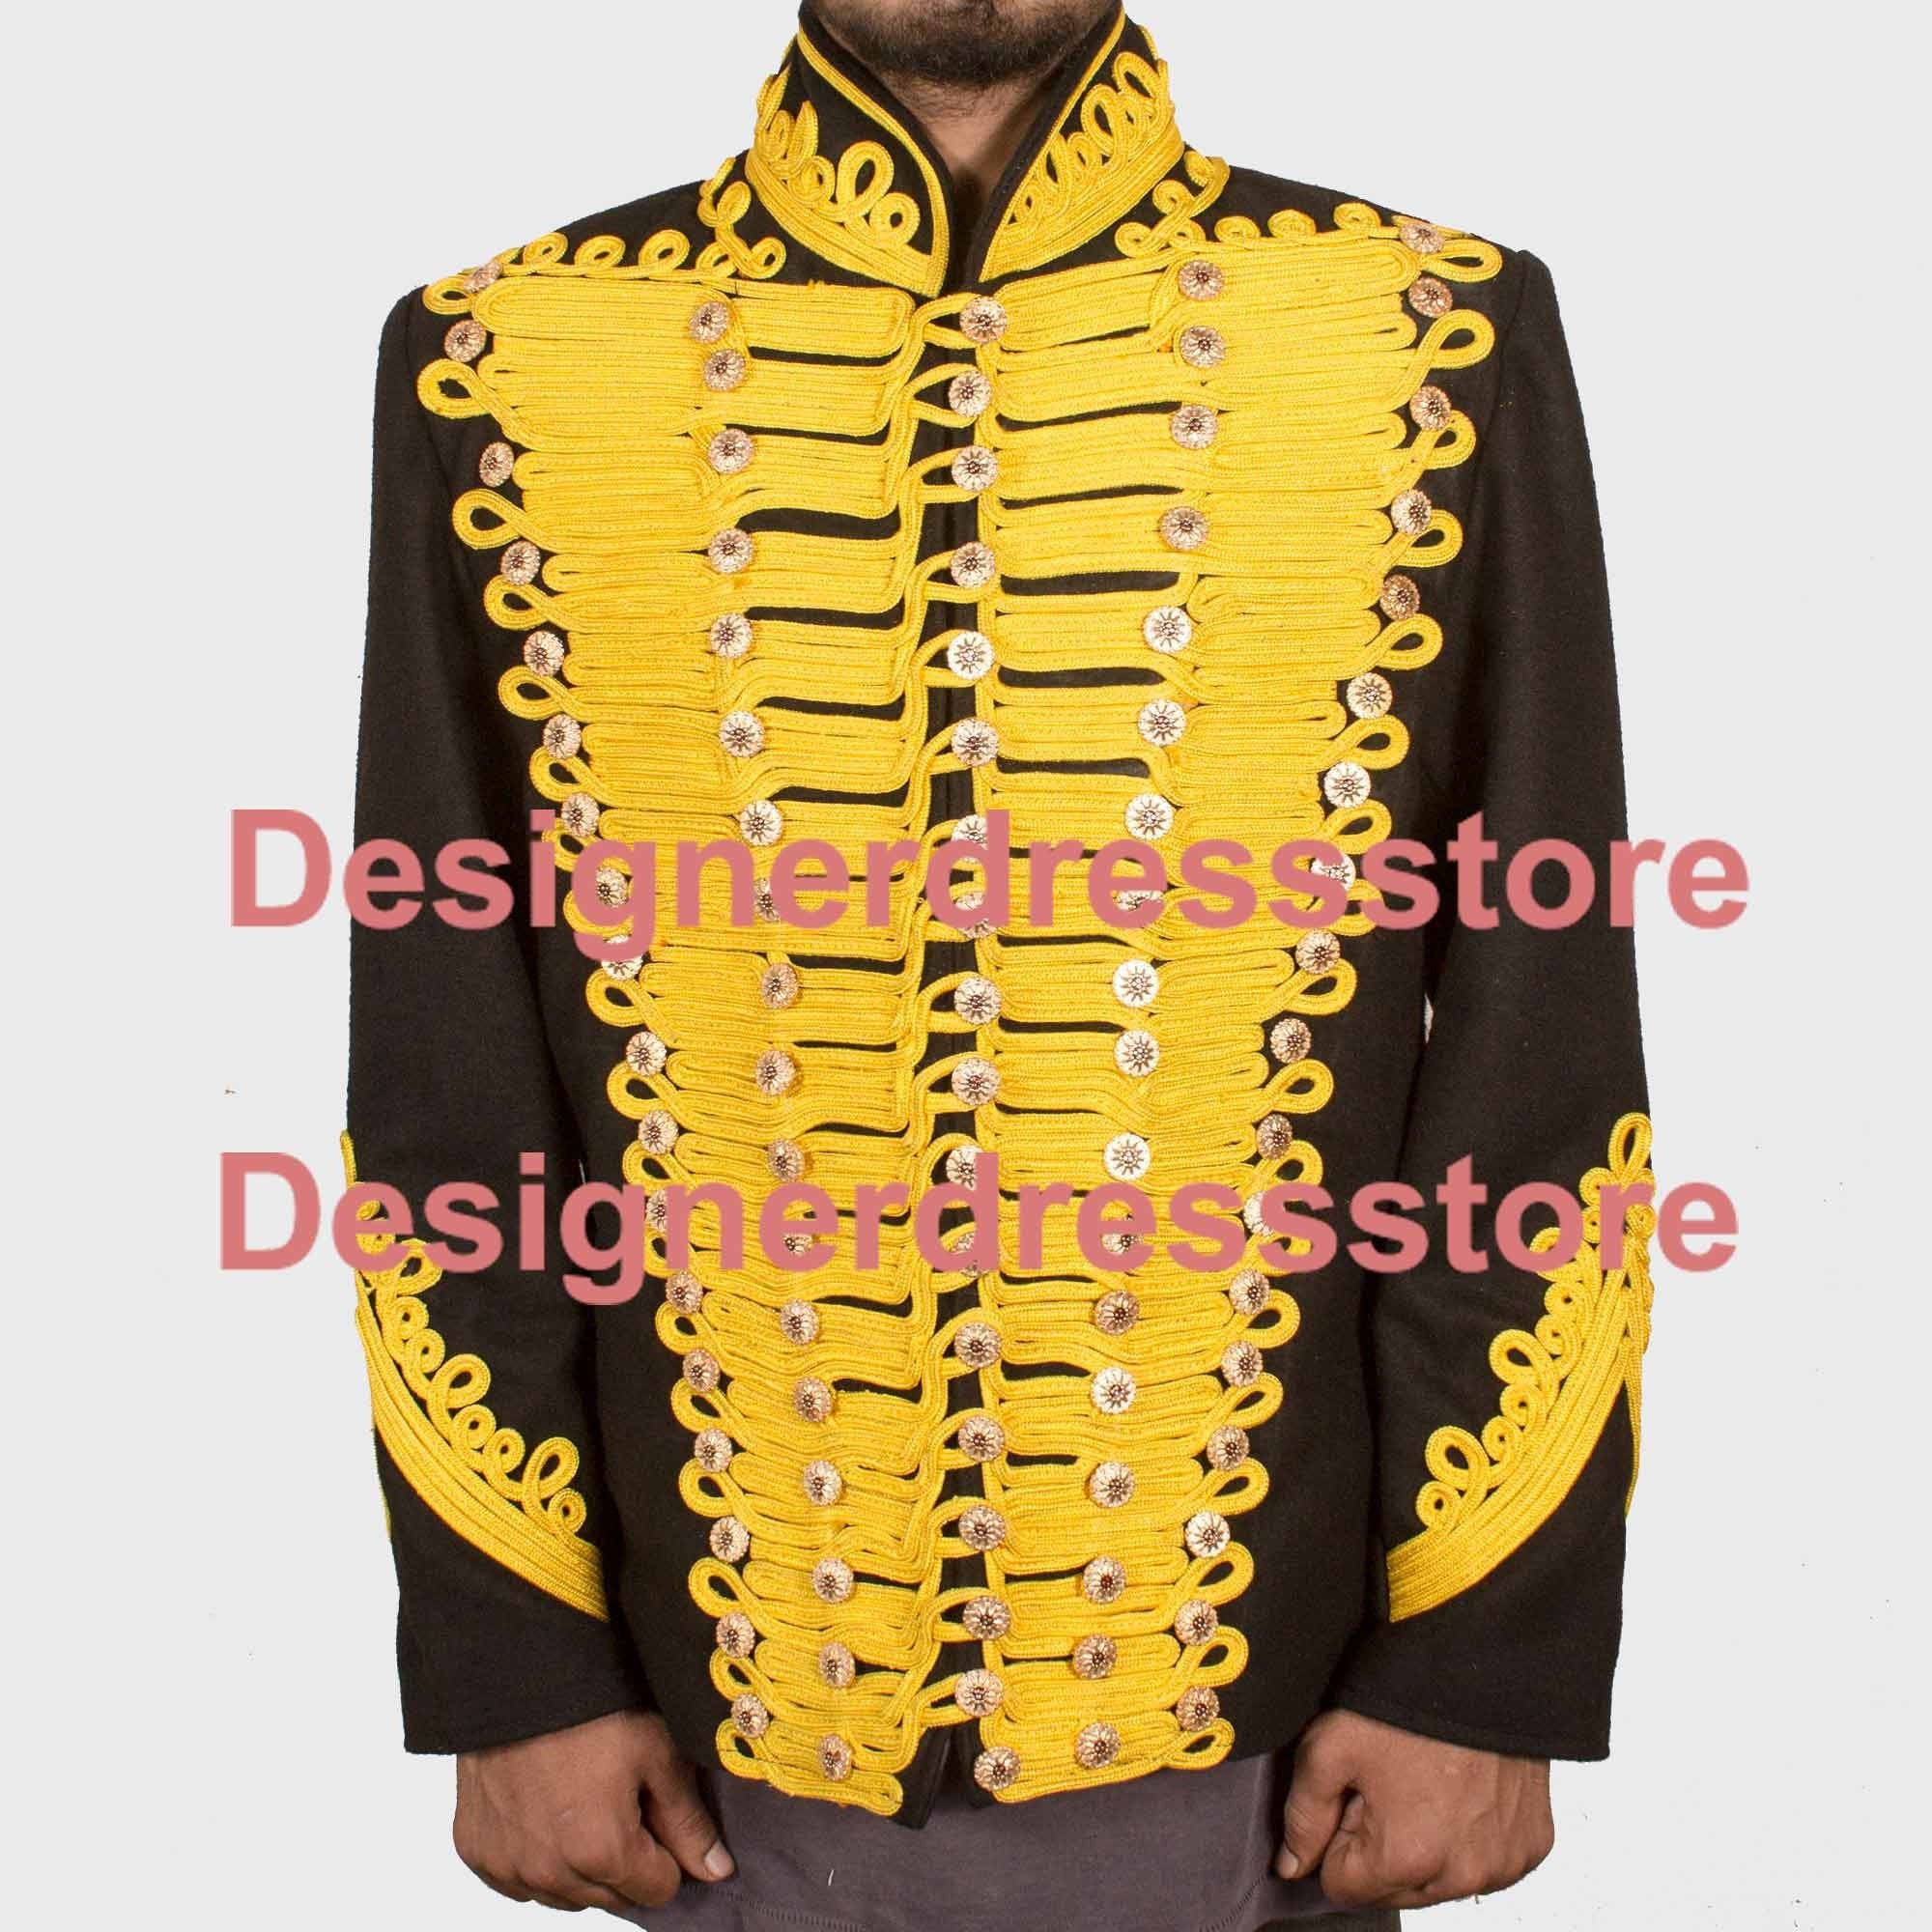 Michael Jackson Royal Military Tail Coat - Michael Jackson Costume